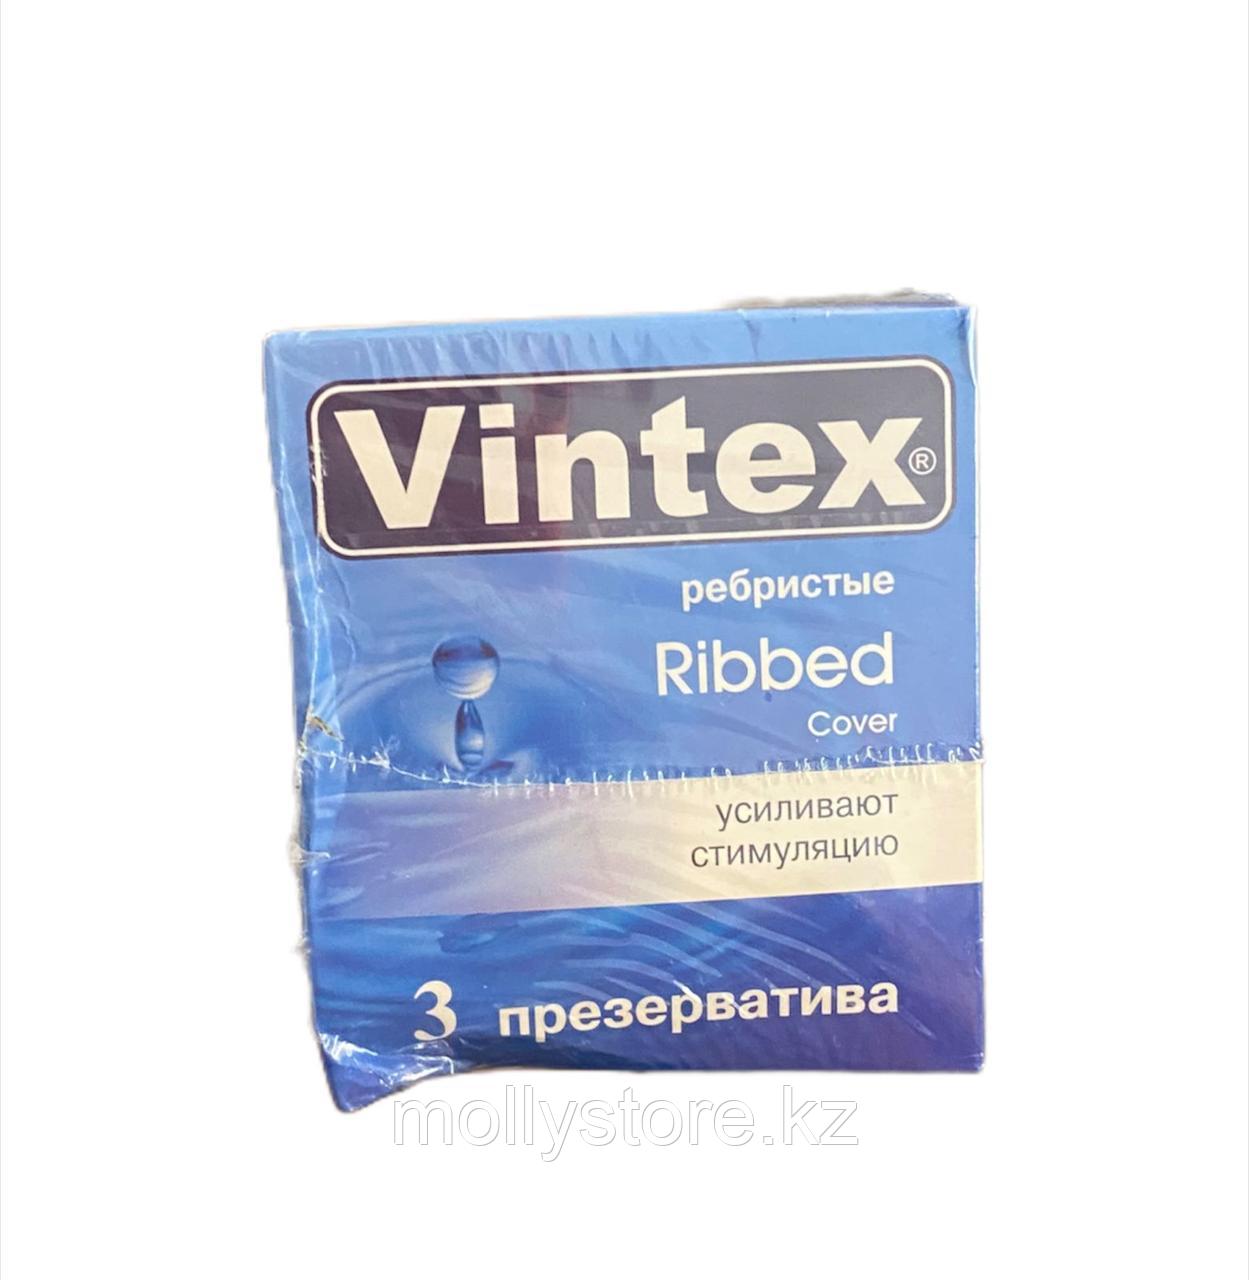 Презервативы Vintex, ребристые 3шт